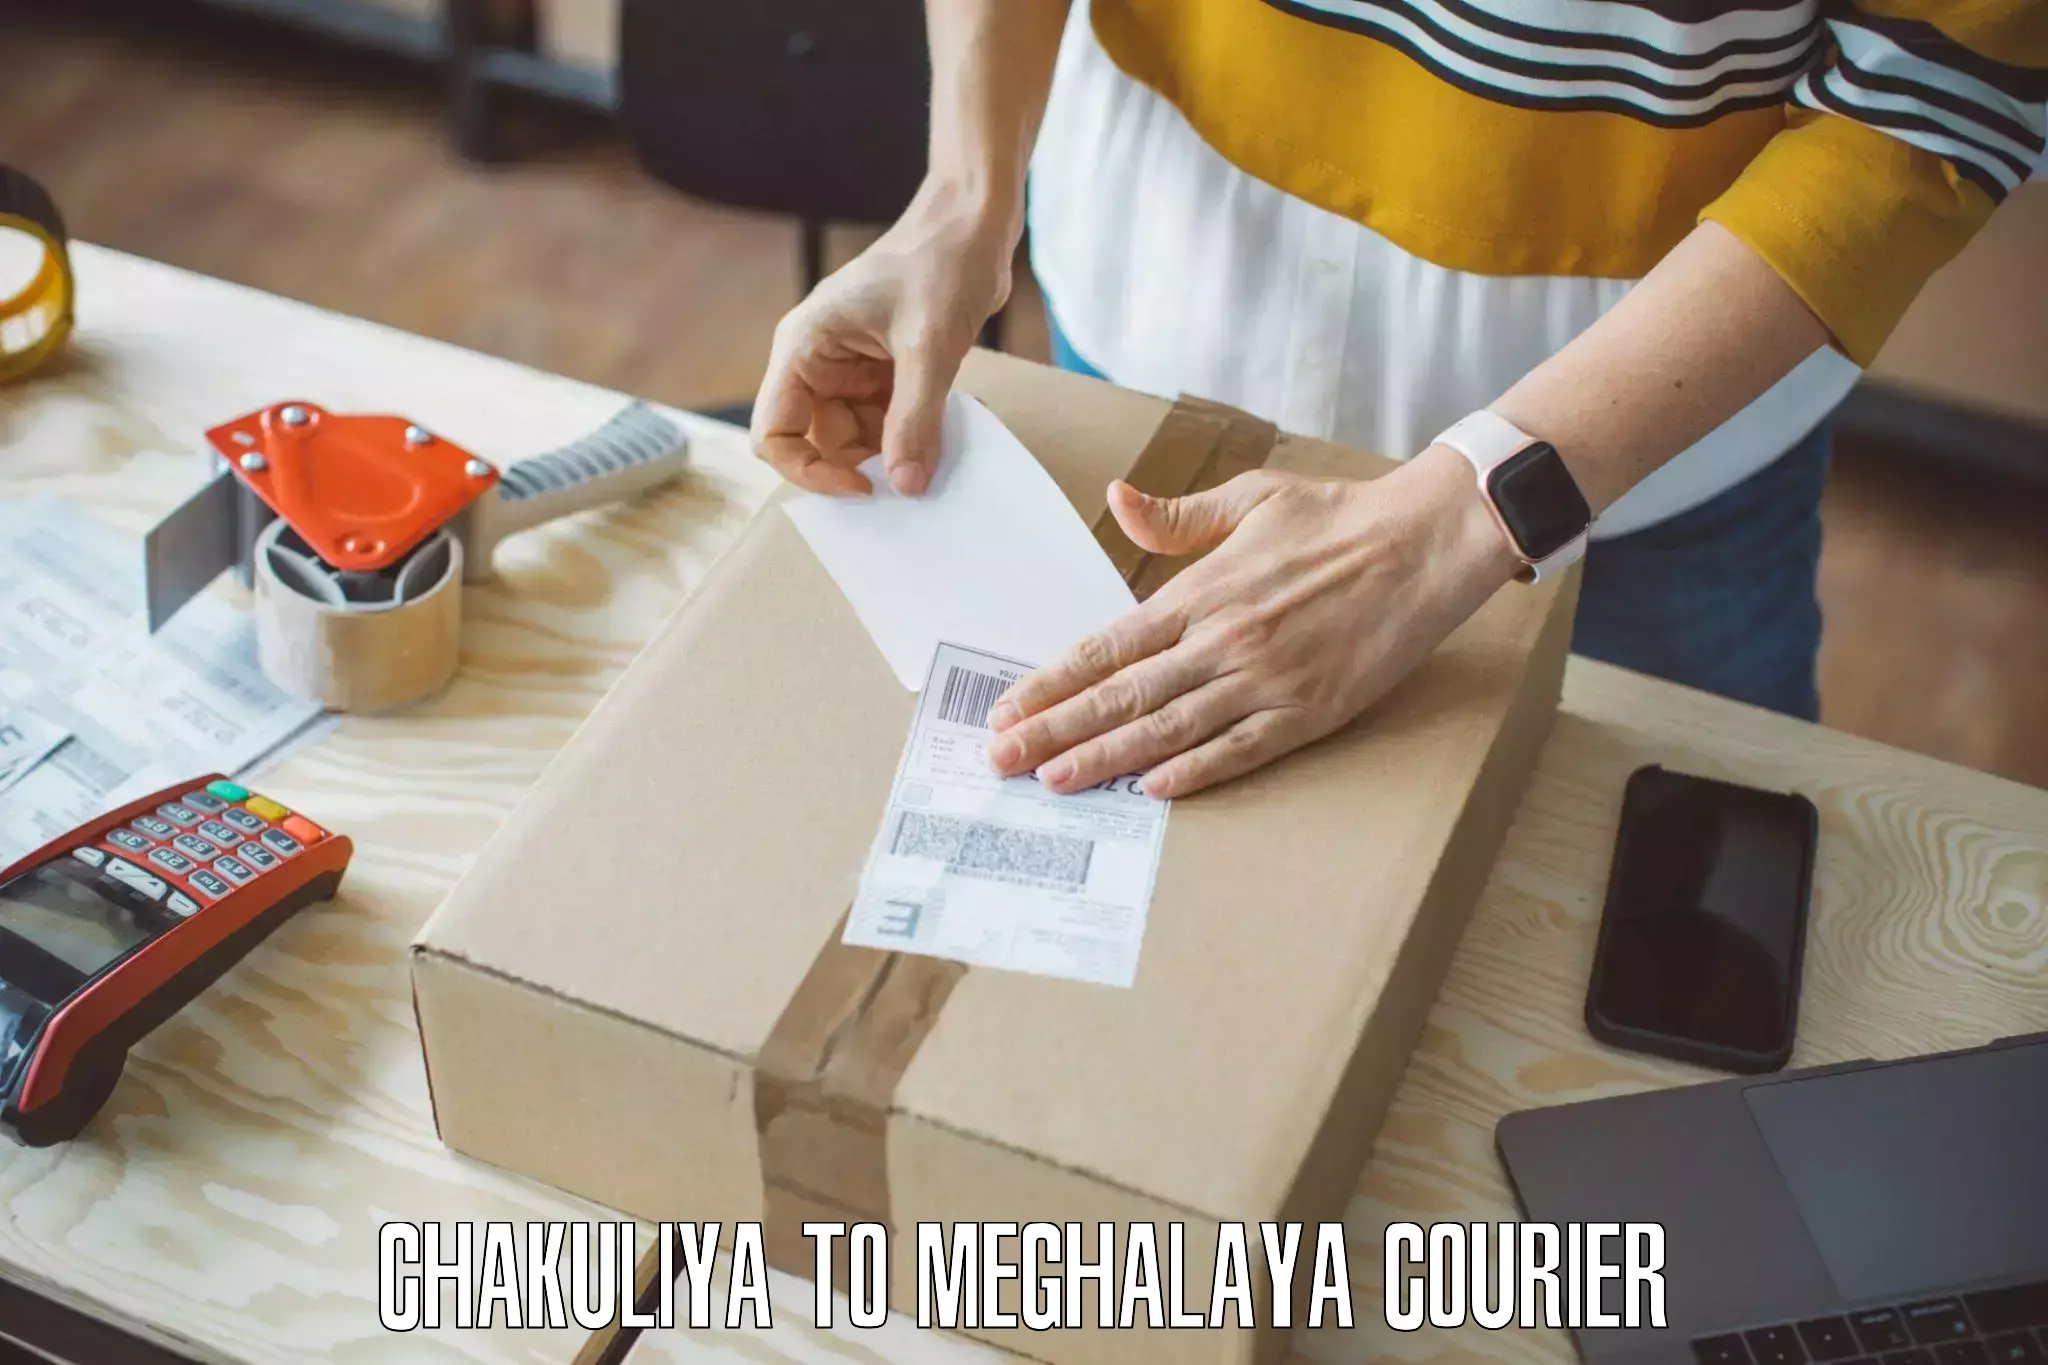 Furniture delivery service Chakuliya to South Garo Hills